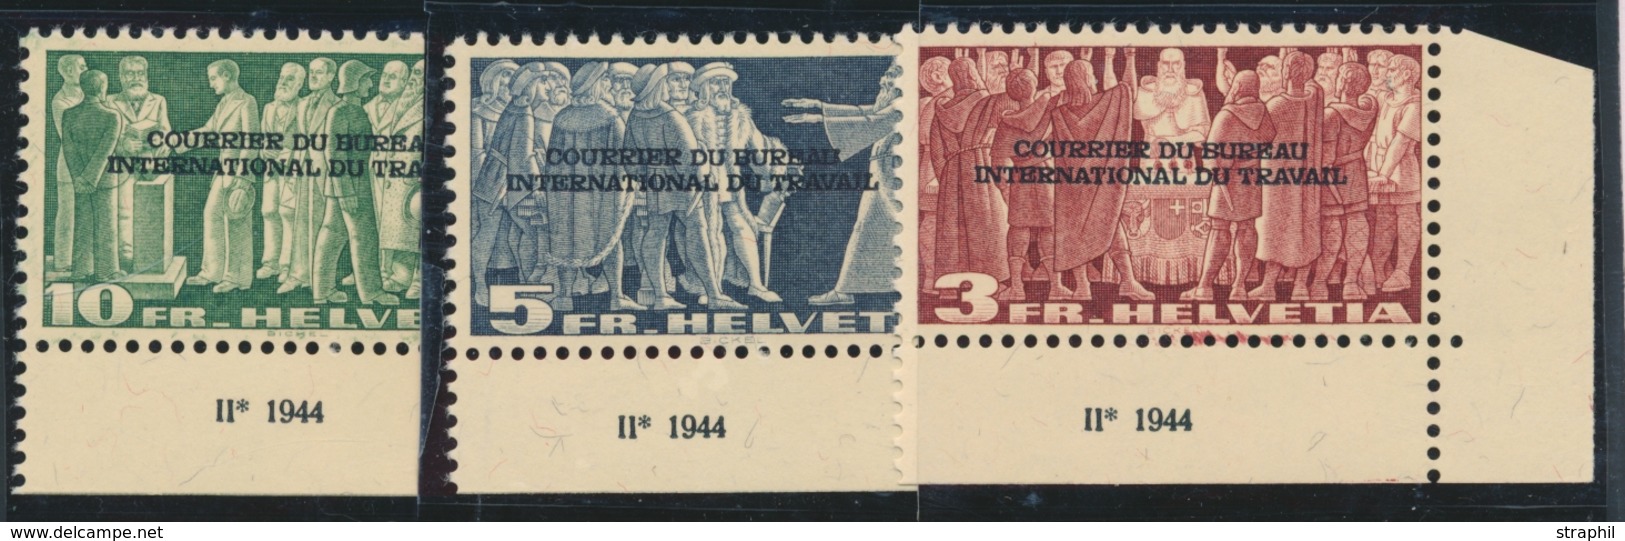 ** SUISSE - TIMBRES DE SERVICE - ** - N°245/47 - CDF - Avec Inscription "II*1944" - TB - Dienstmarken